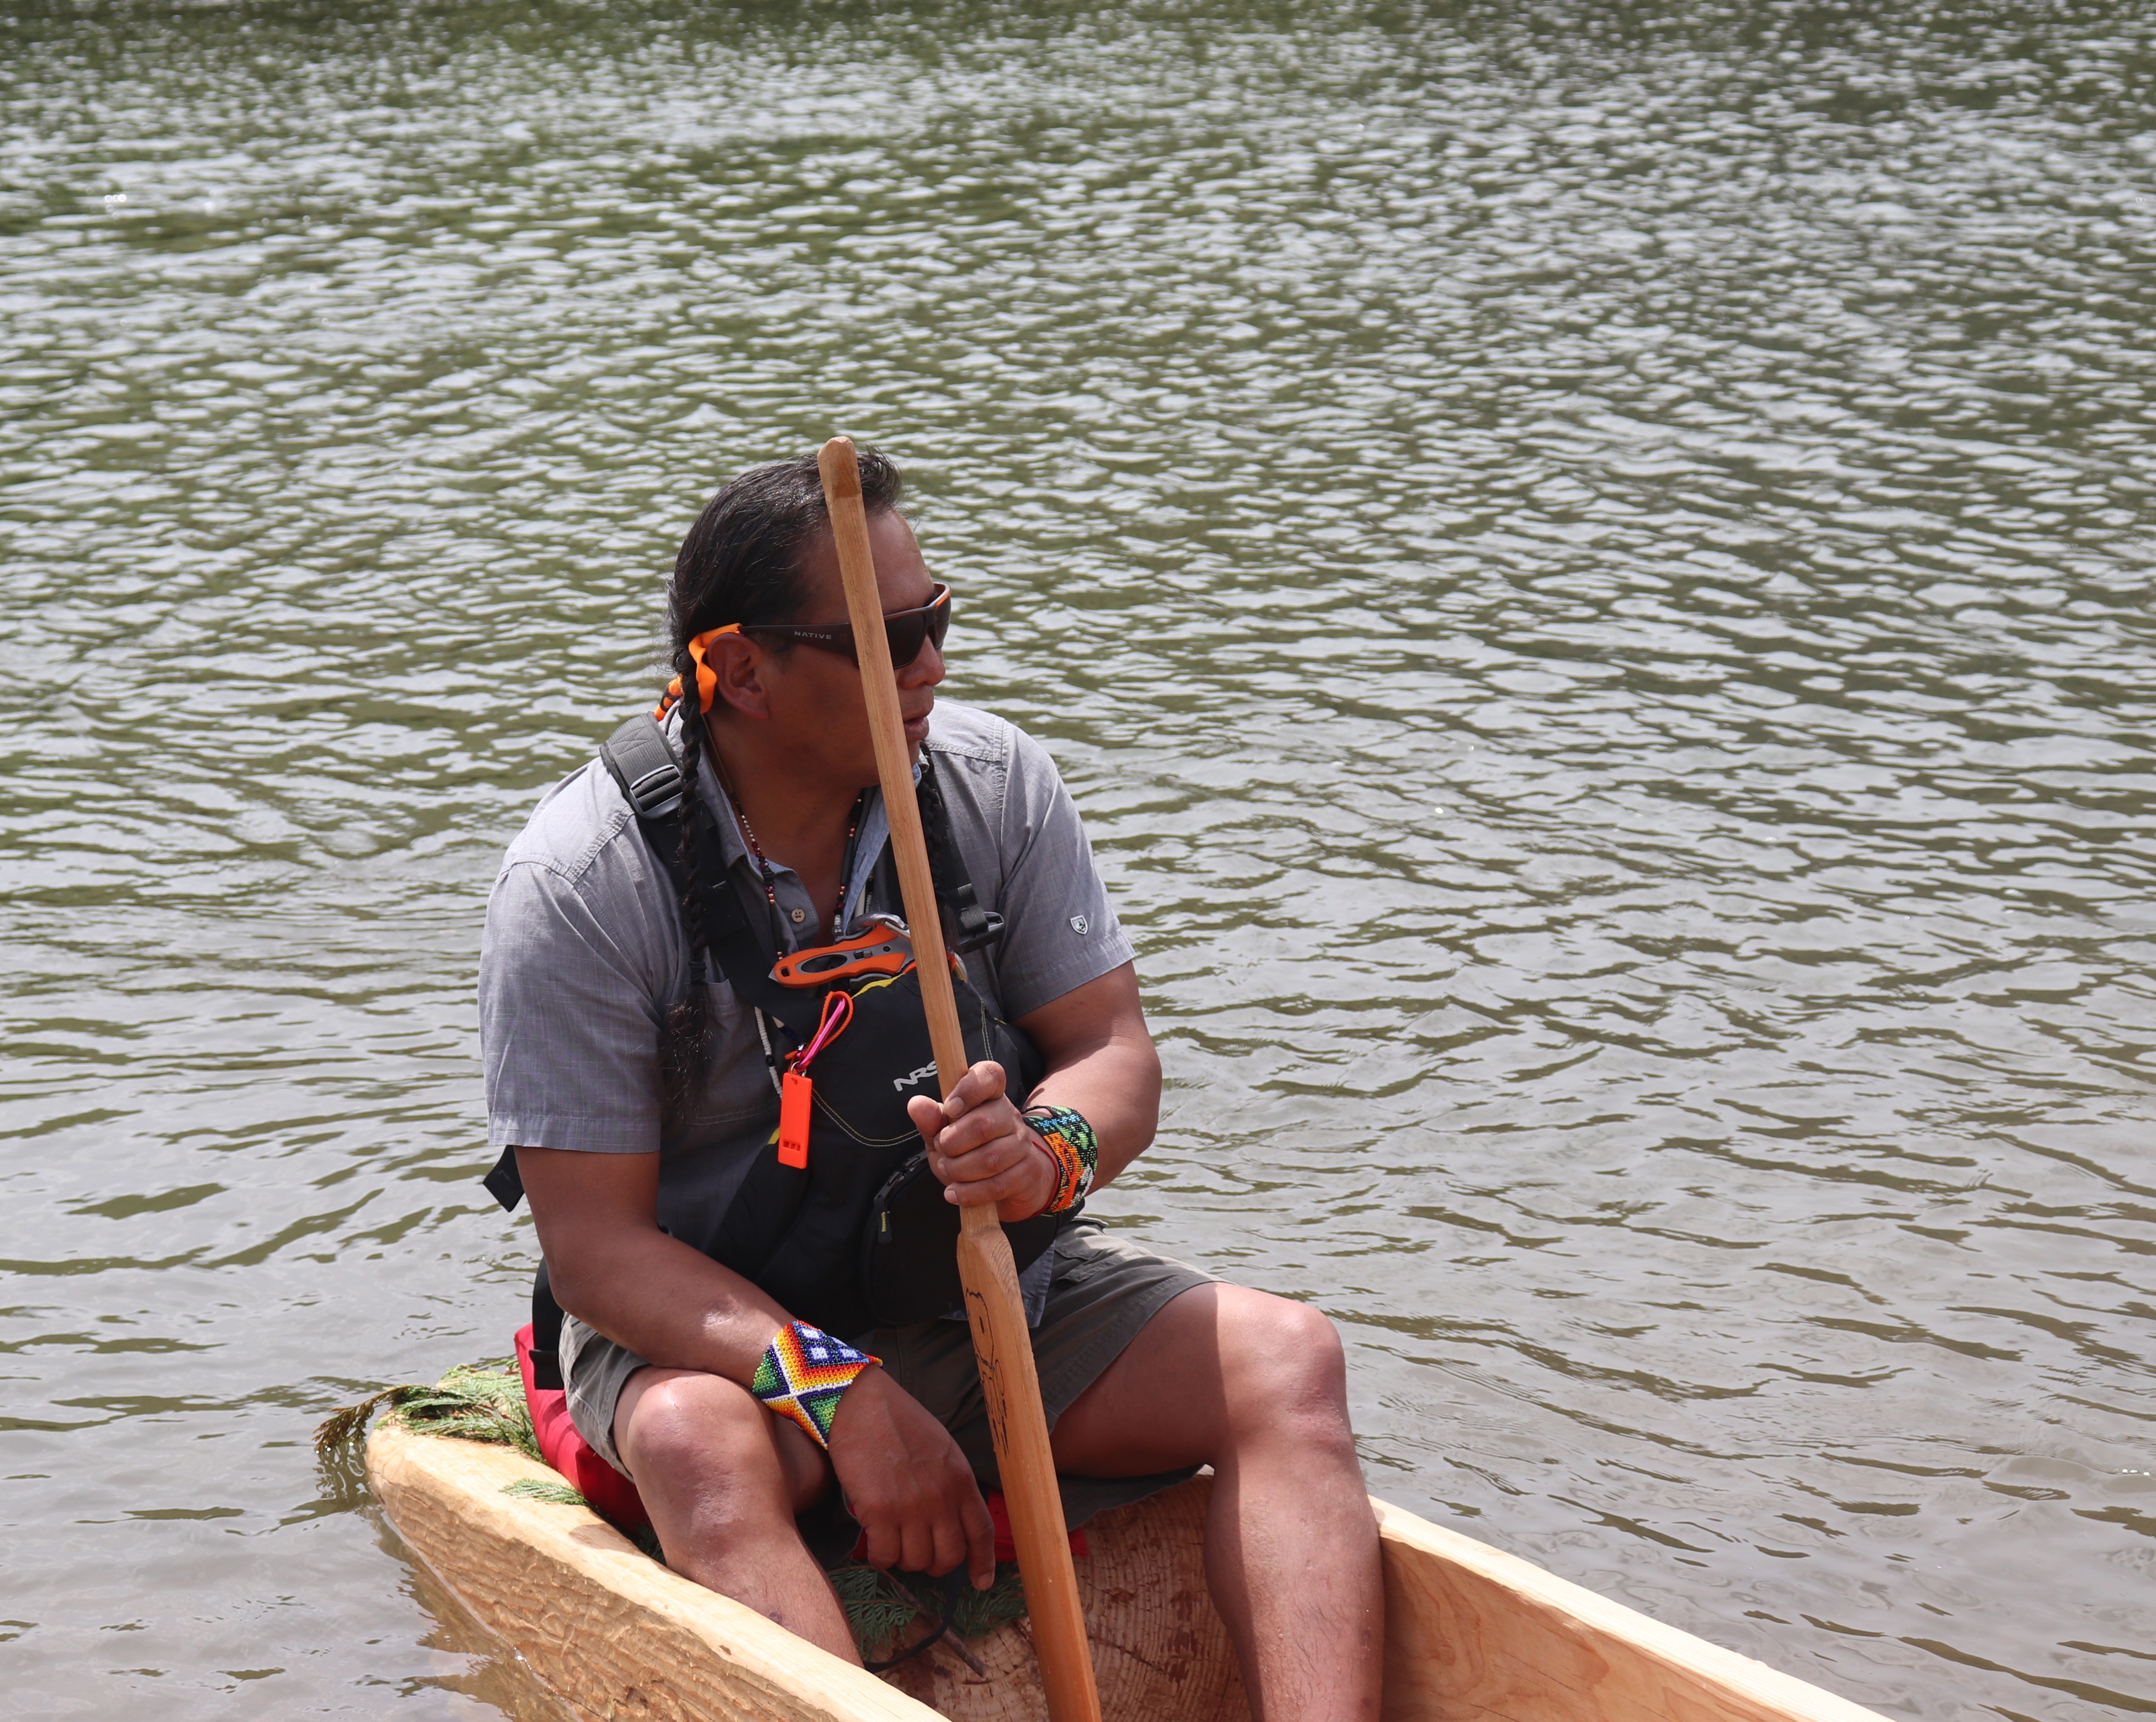 Gary Dorr sits inside the dugout canoe he made